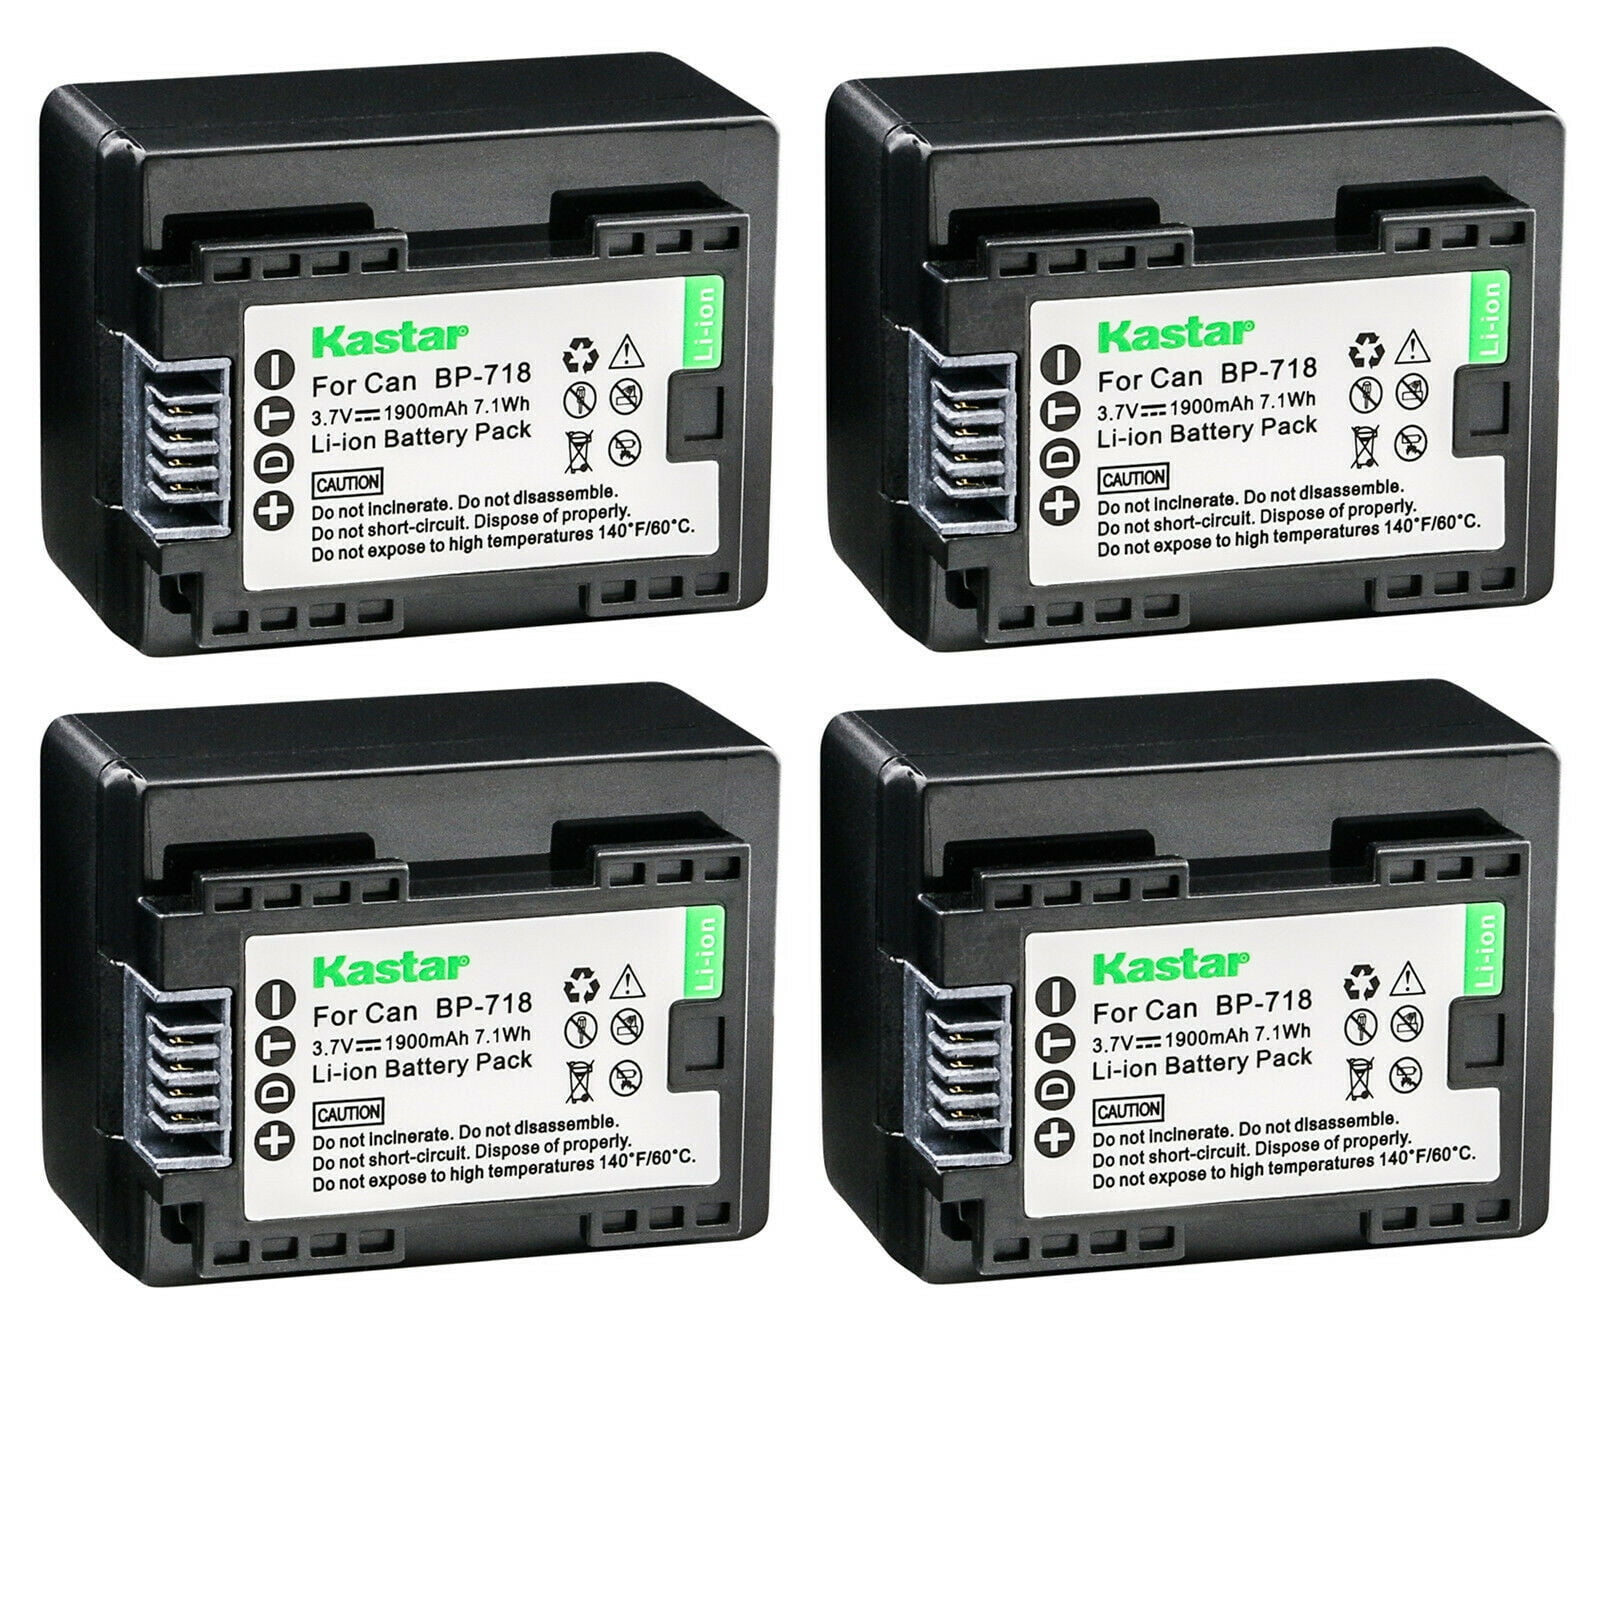 Kastar 4-Pack BP-718 Battery 3.7V 1900mAh Replacement for Canon VIXIA HF R600 HFR600, VIXIA HF R700 HFR700, VIXIA HF R800 HFR800, LEGRIA HF M36 HFM36, LEGRIA HF M38 HFM38, LEGRIA HF